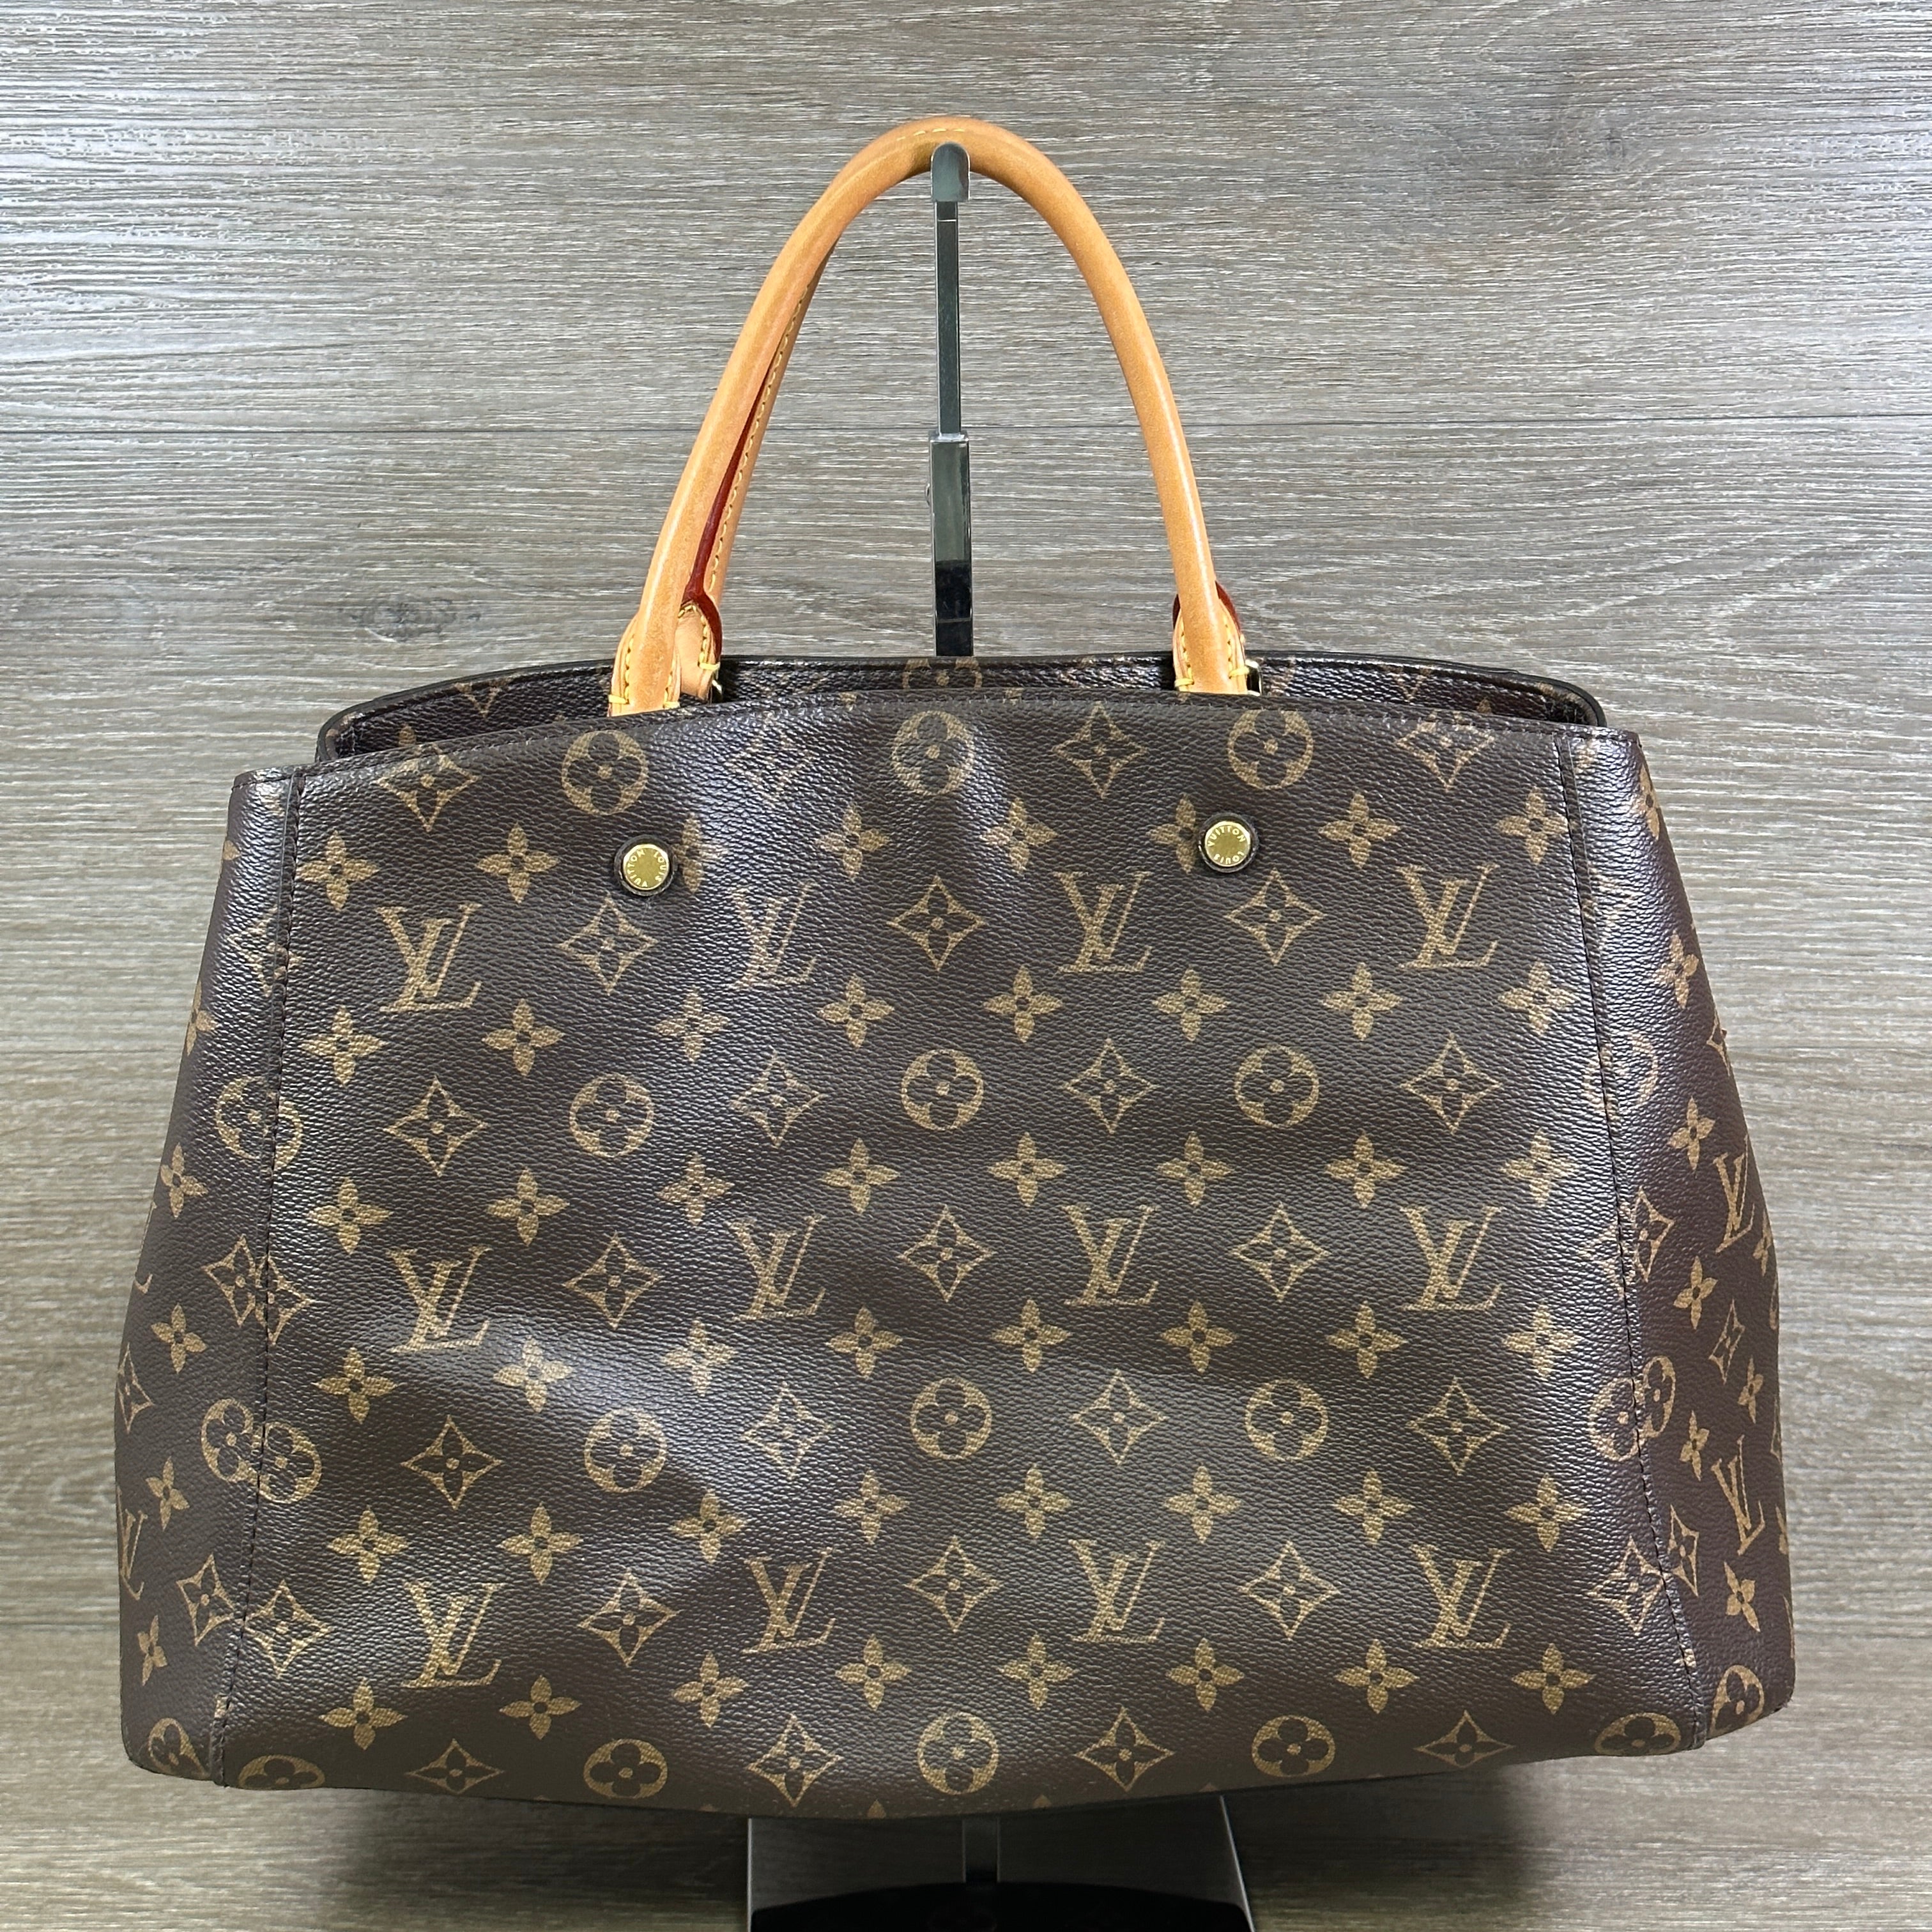 Louis Vuitton Montaigne MM - Good or Bag